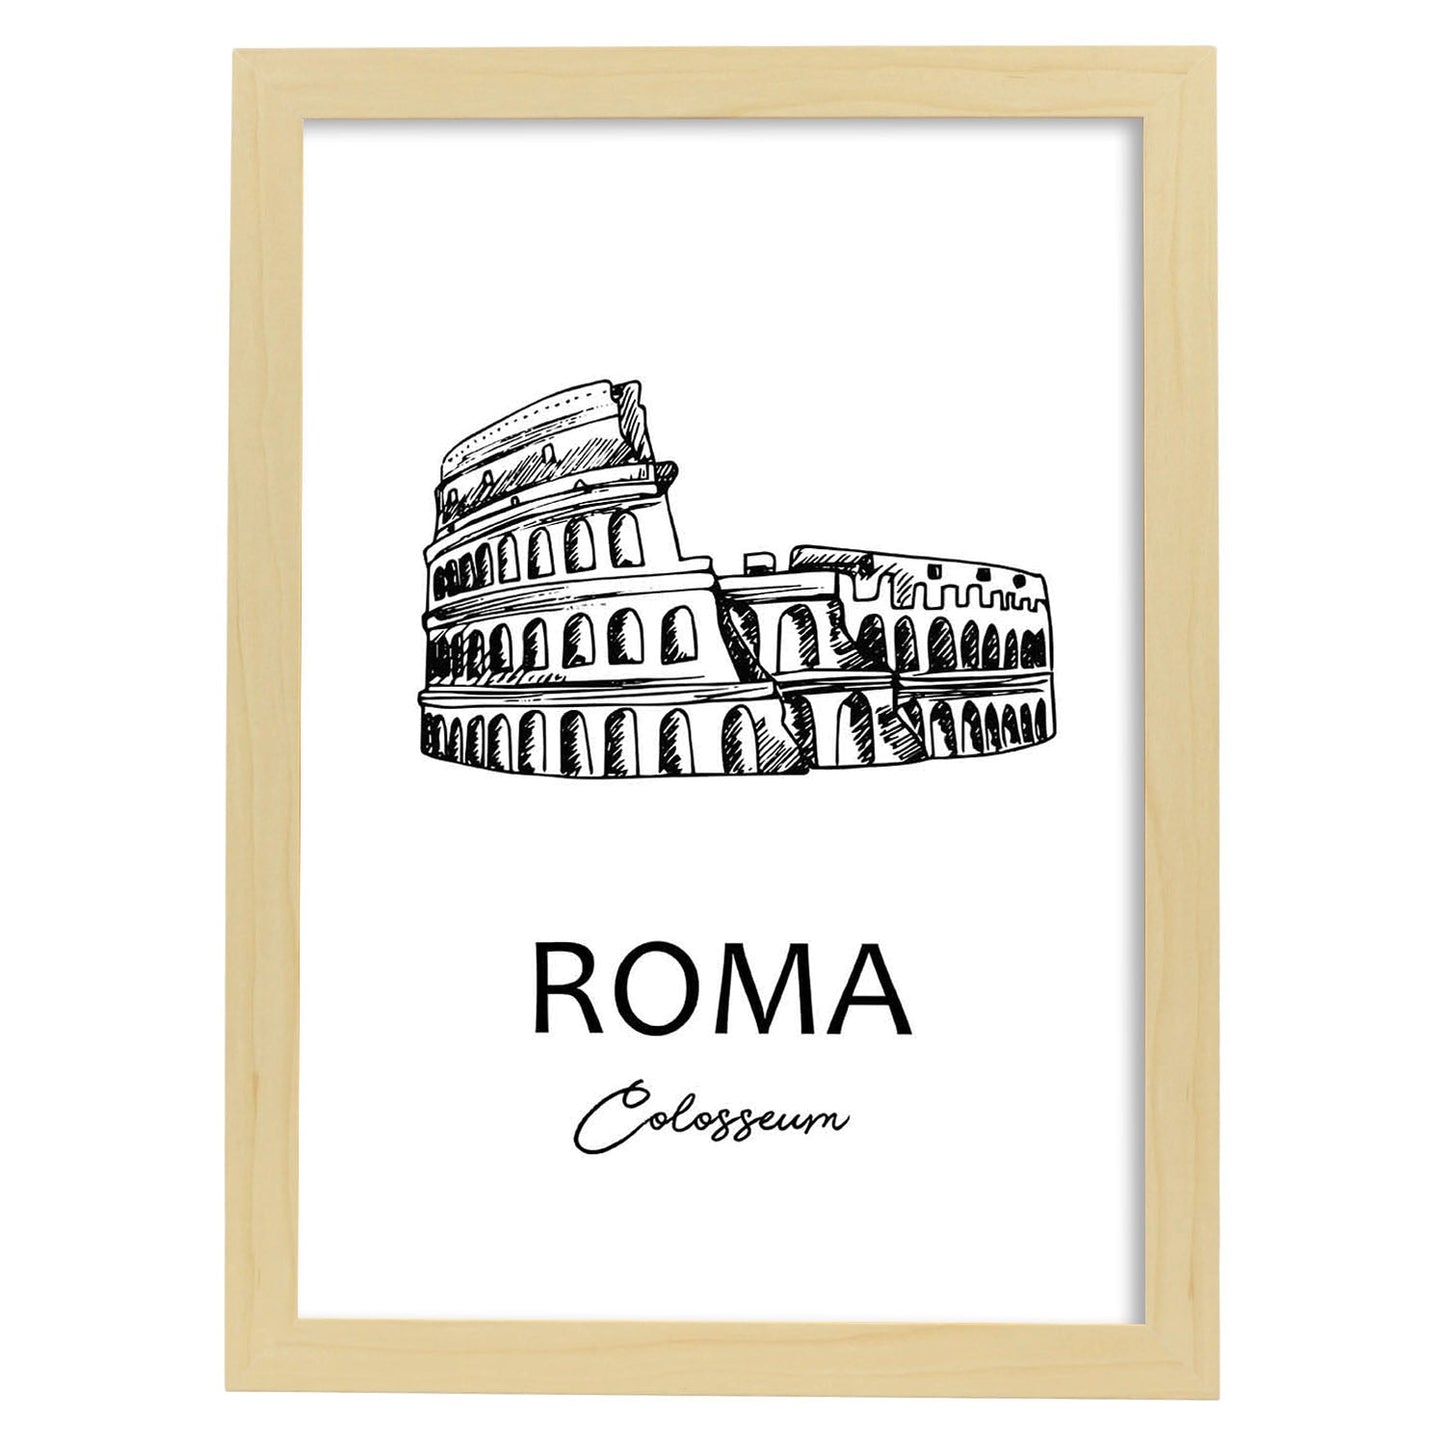 Poster de Roma - El Coliseo. Láminas con monumentos de ciudades.-Artwork-Nacnic-A4-Marco Madera clara-Nacnic Estudio SL